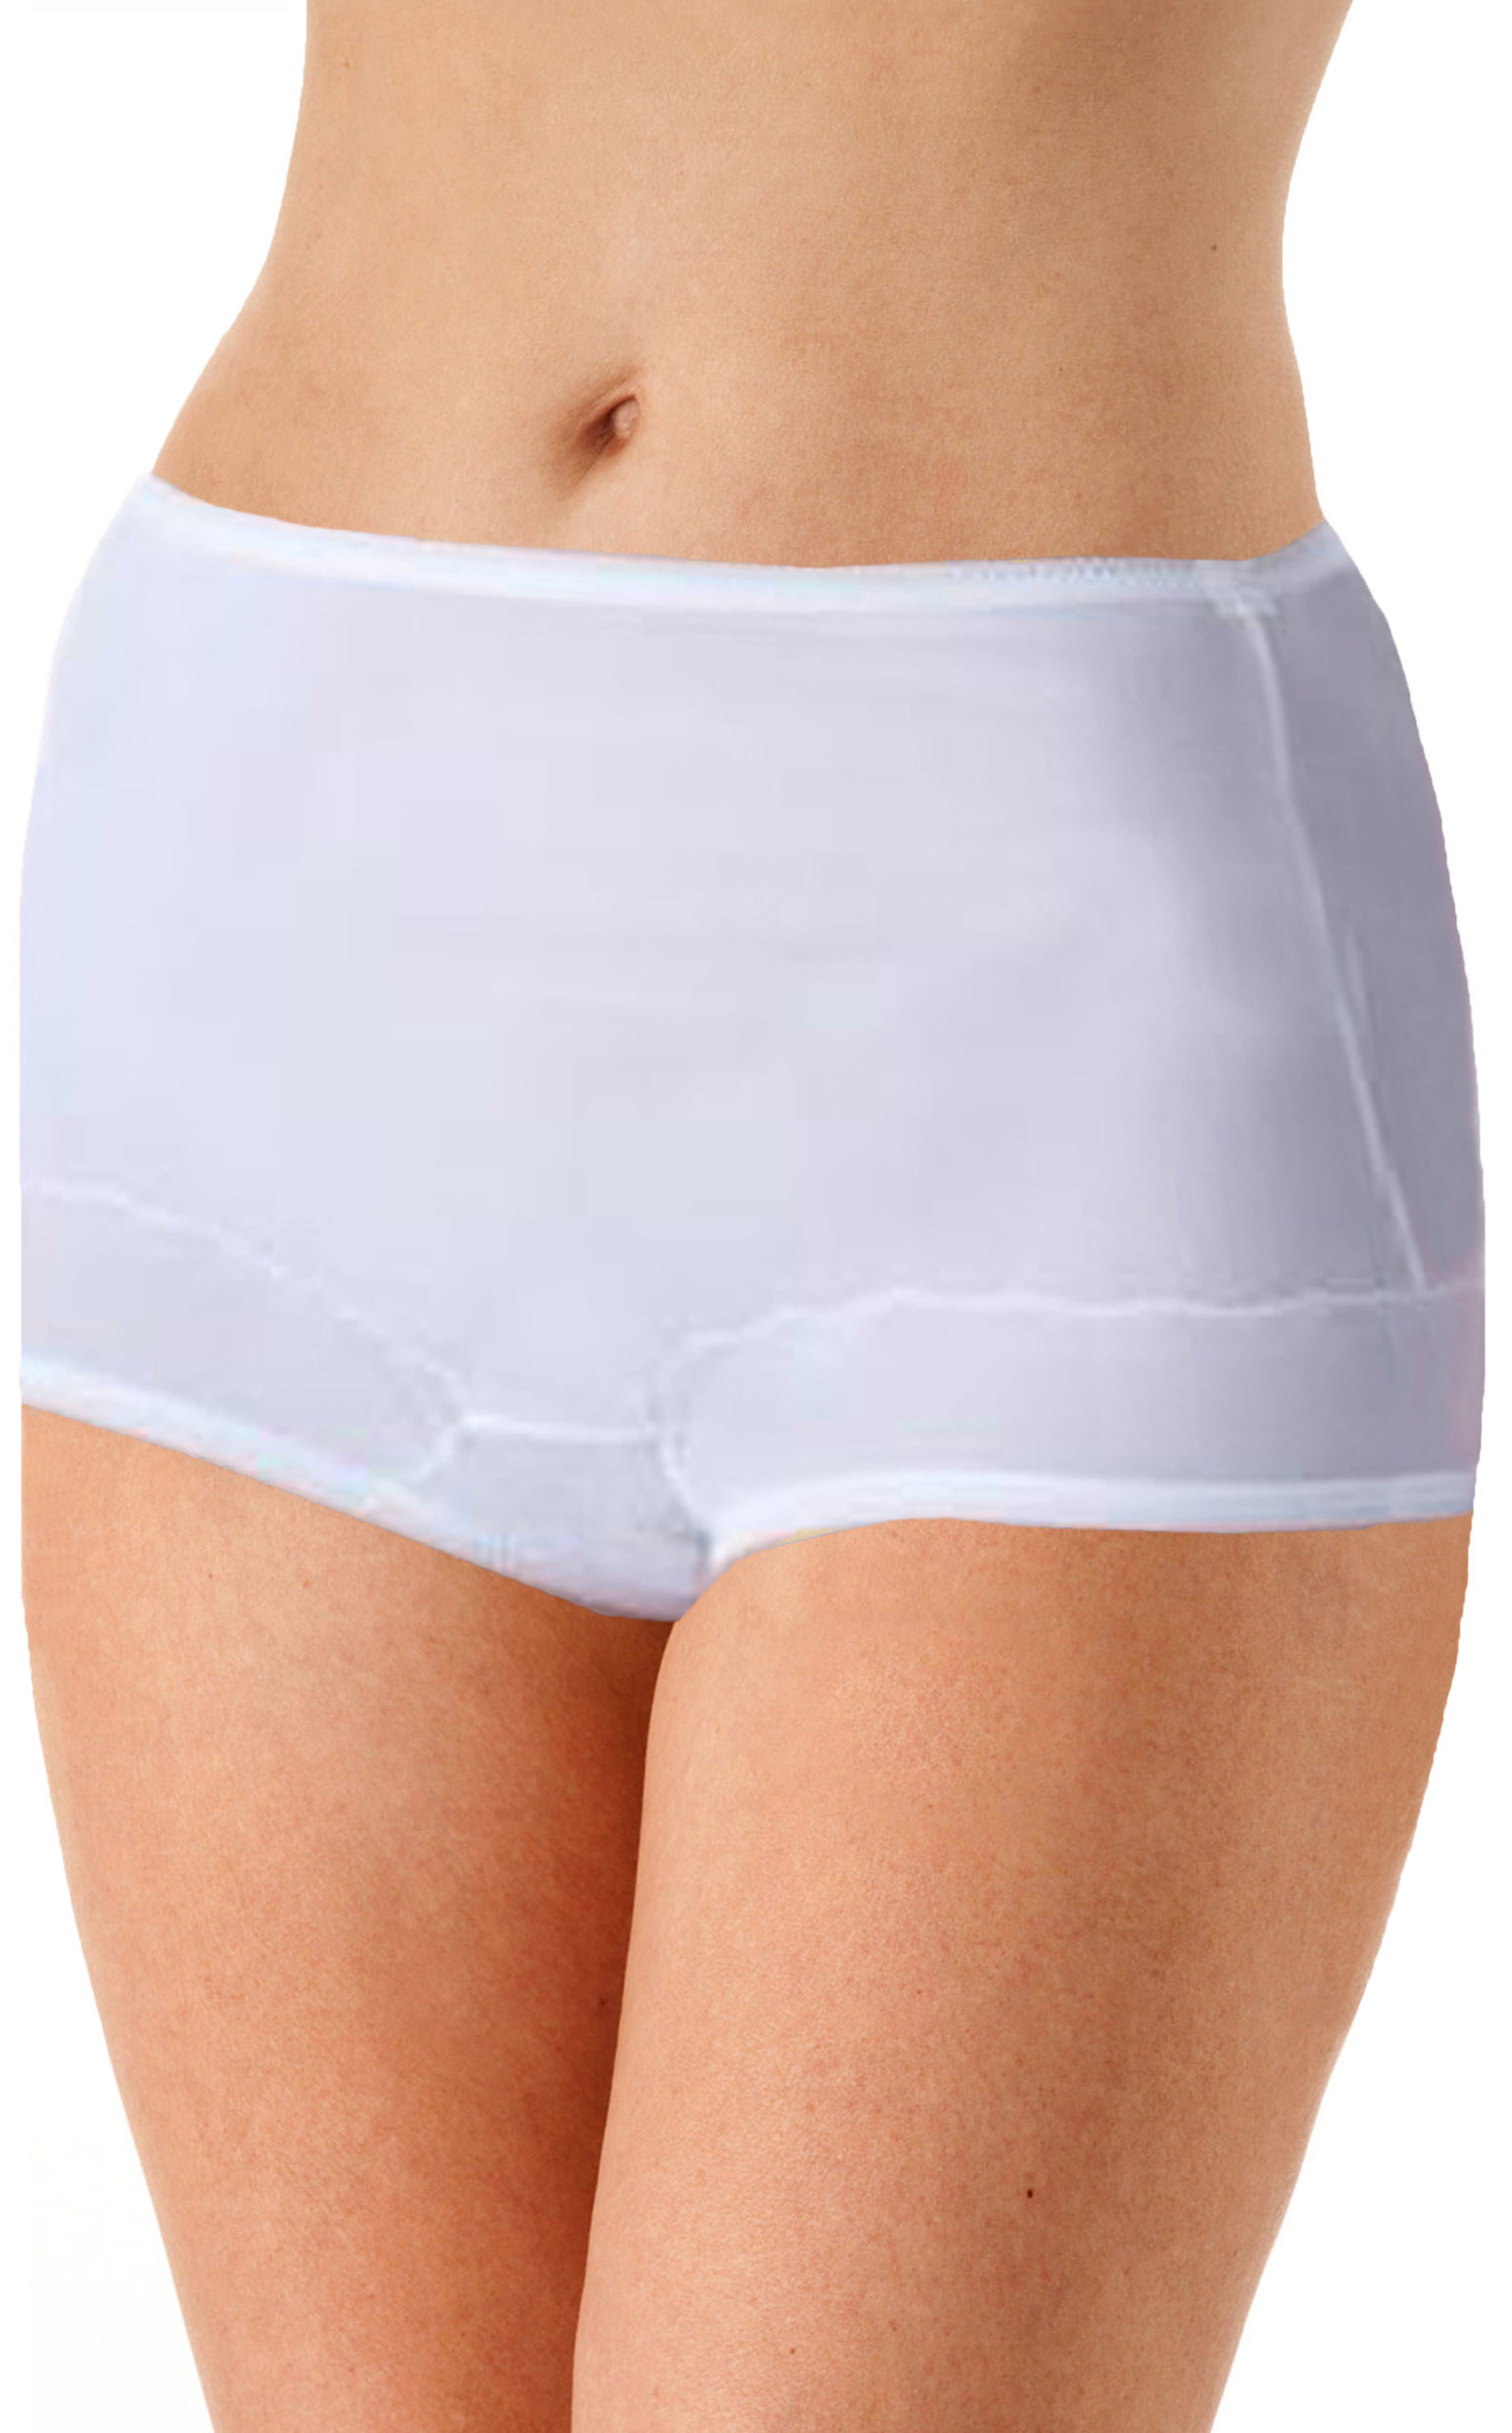 SIZE XL WOMEN nylon lacy panties vintage style soft briefs